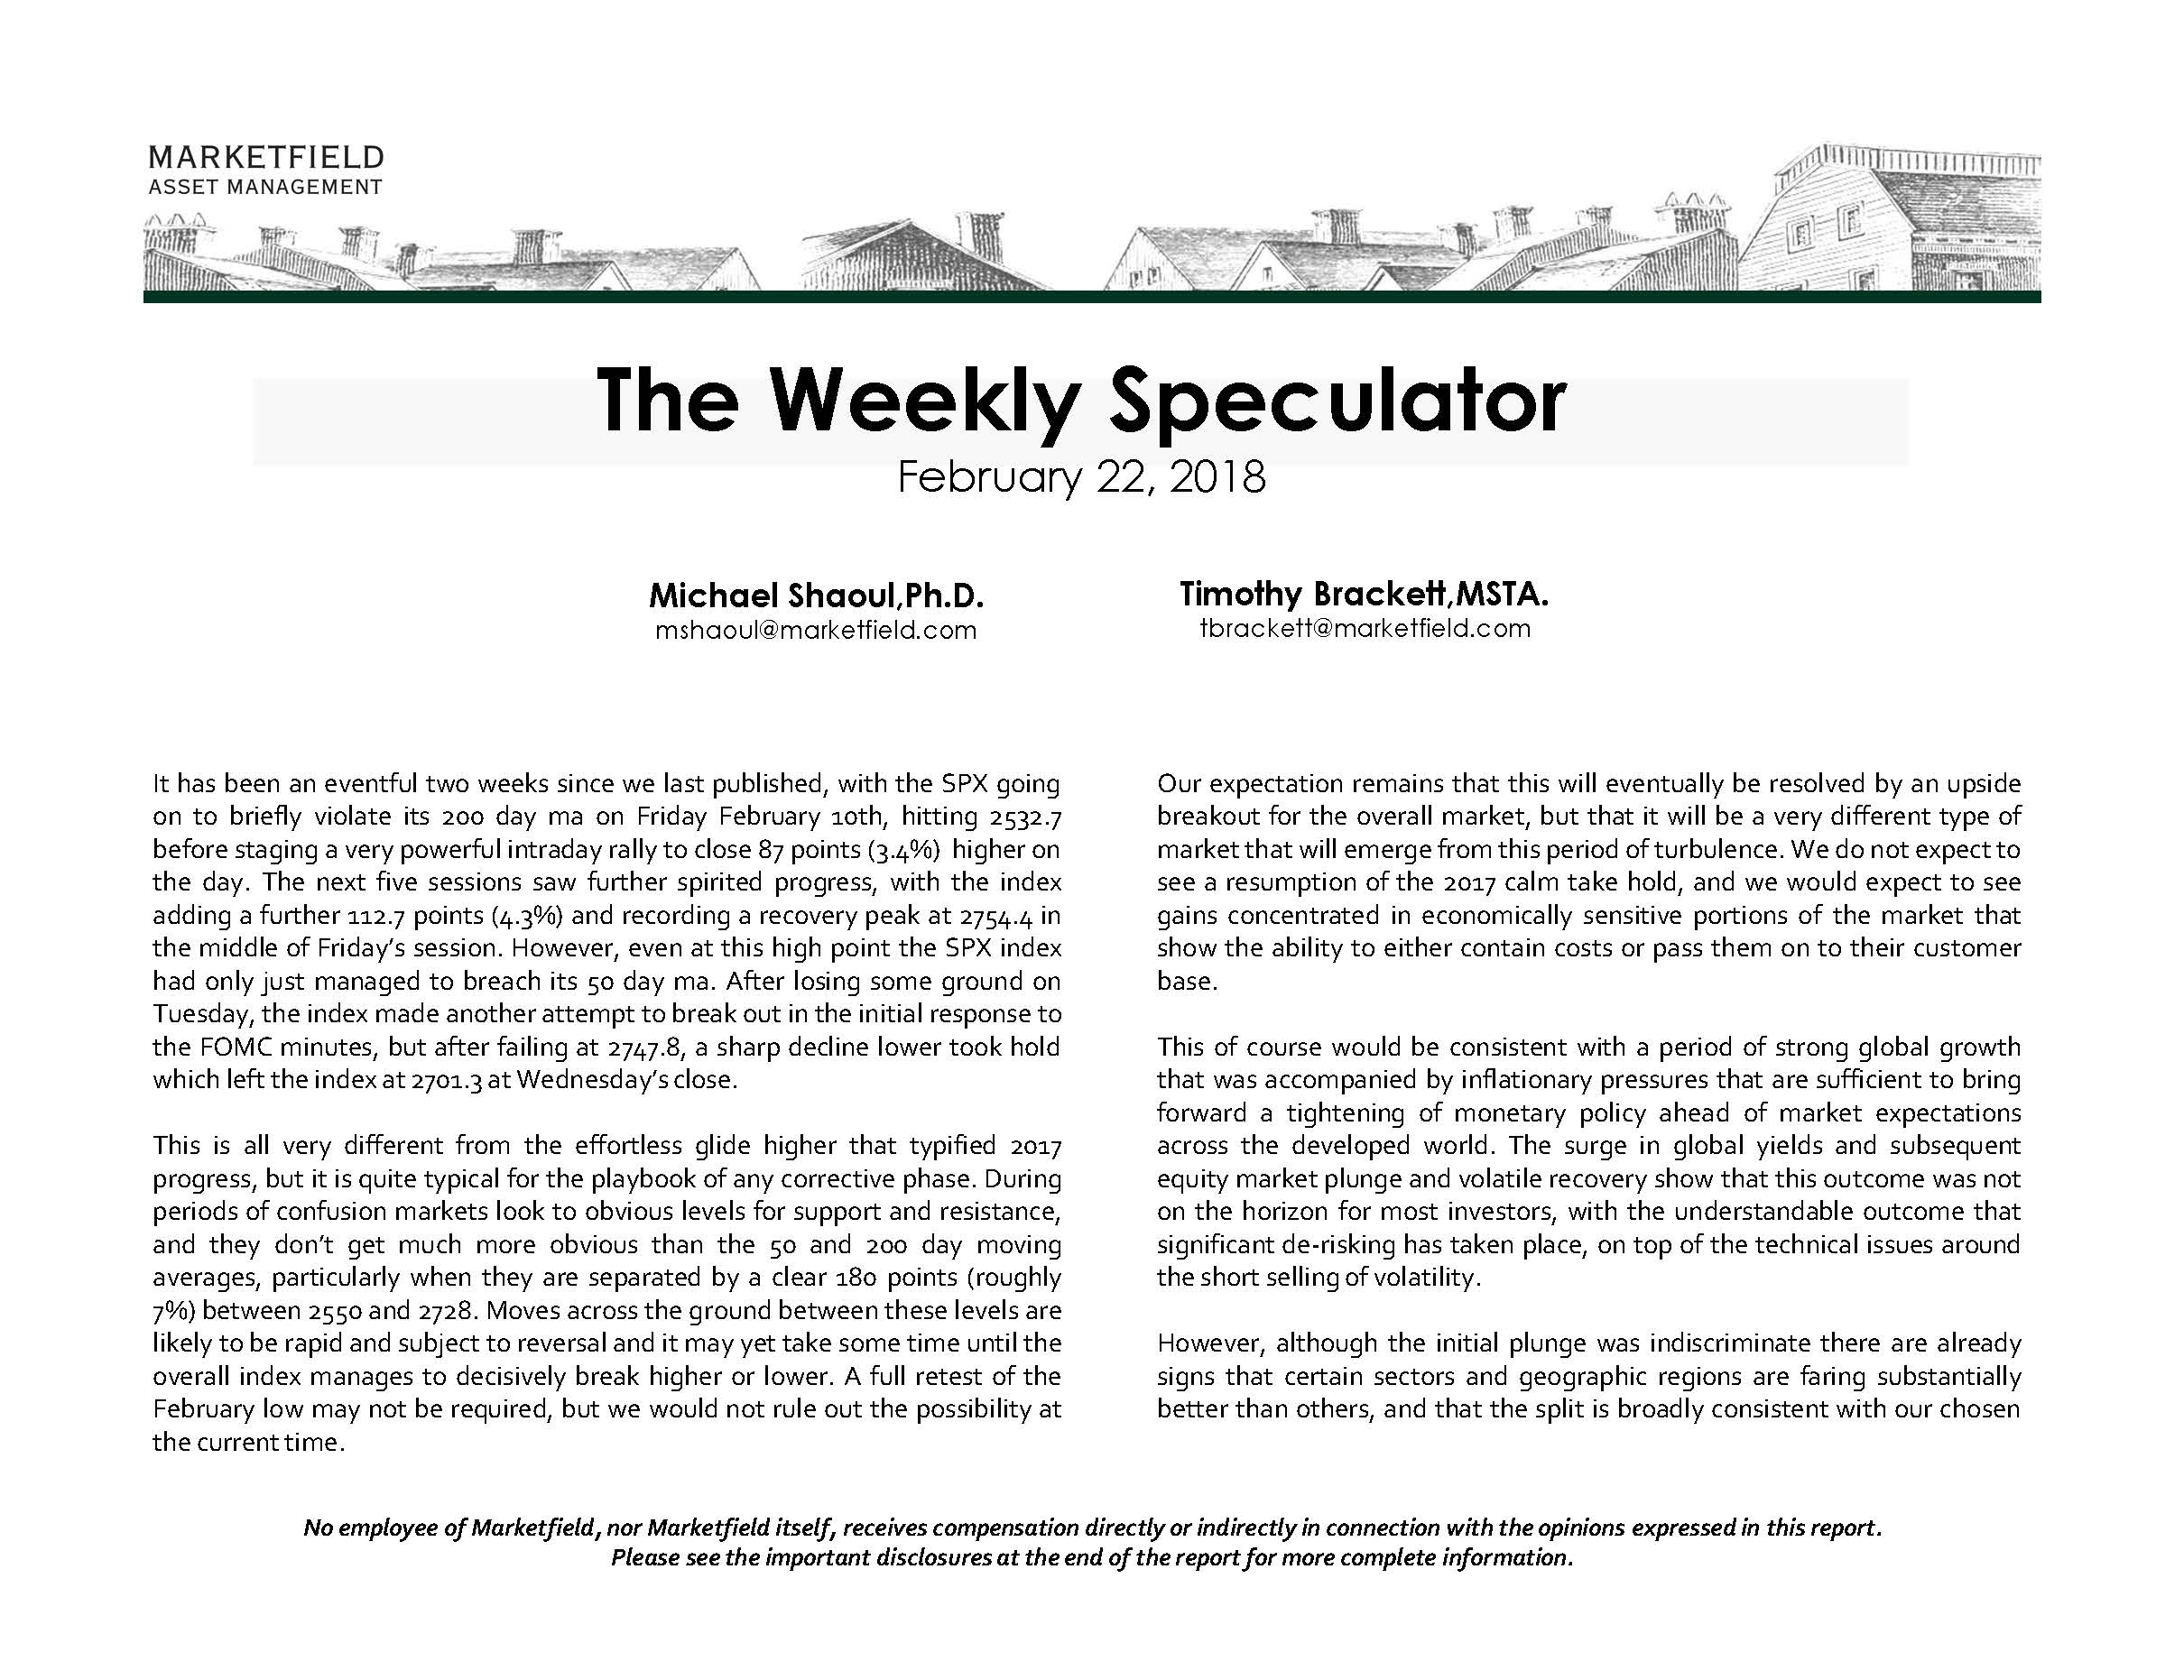 Marketfield Weekly Speculator 02-22-18_Page_01.jpg